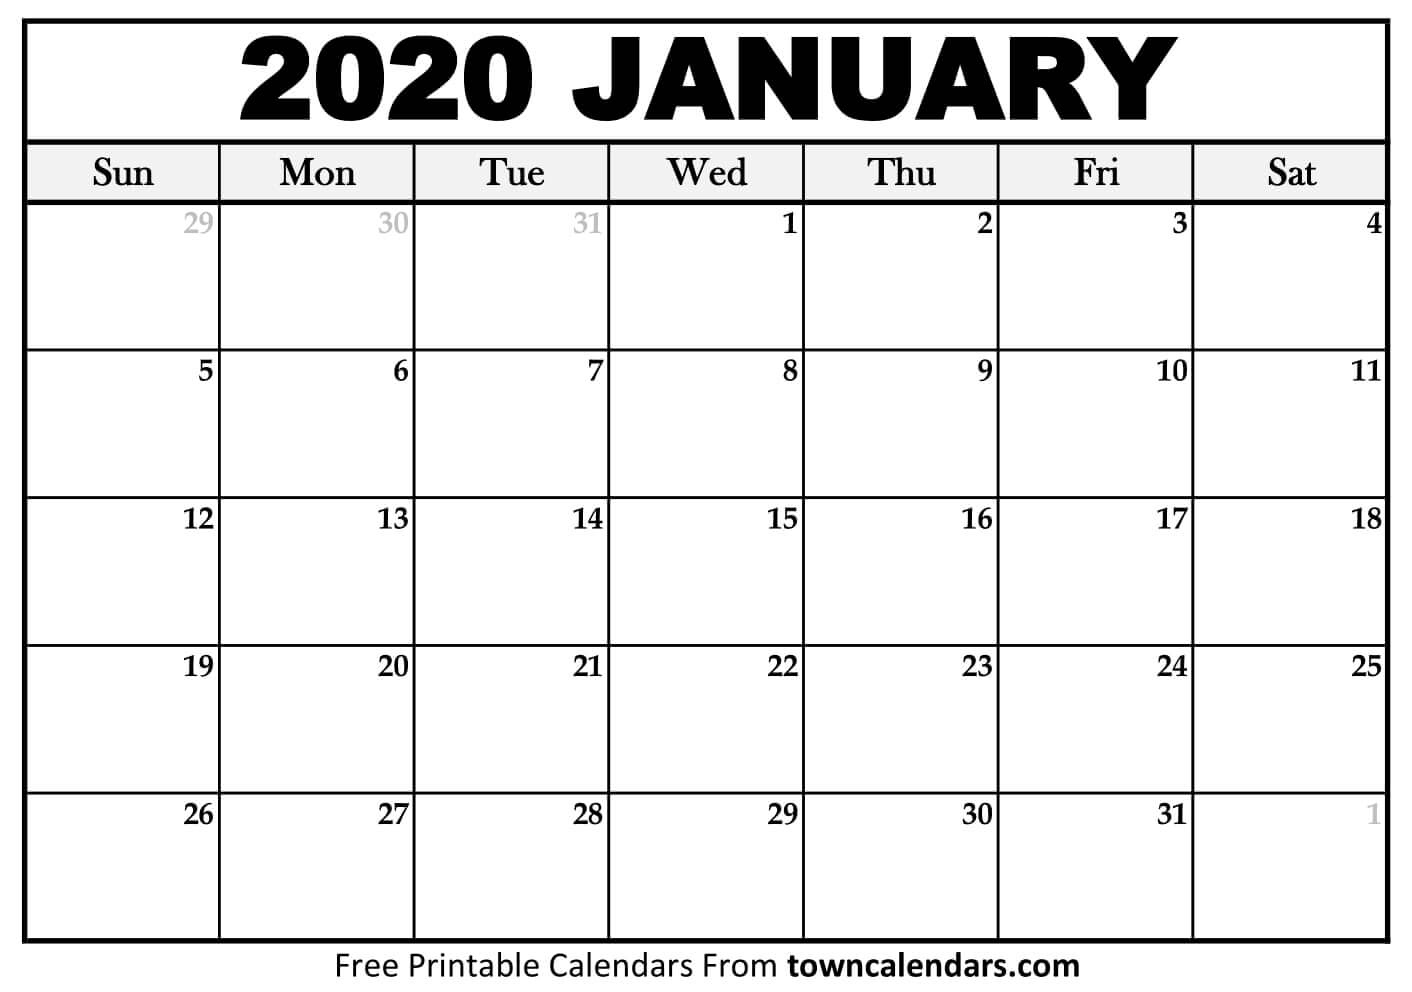 2020 Calendar Printable - Towncalendars Blank January 2020 Calendar Printable Free